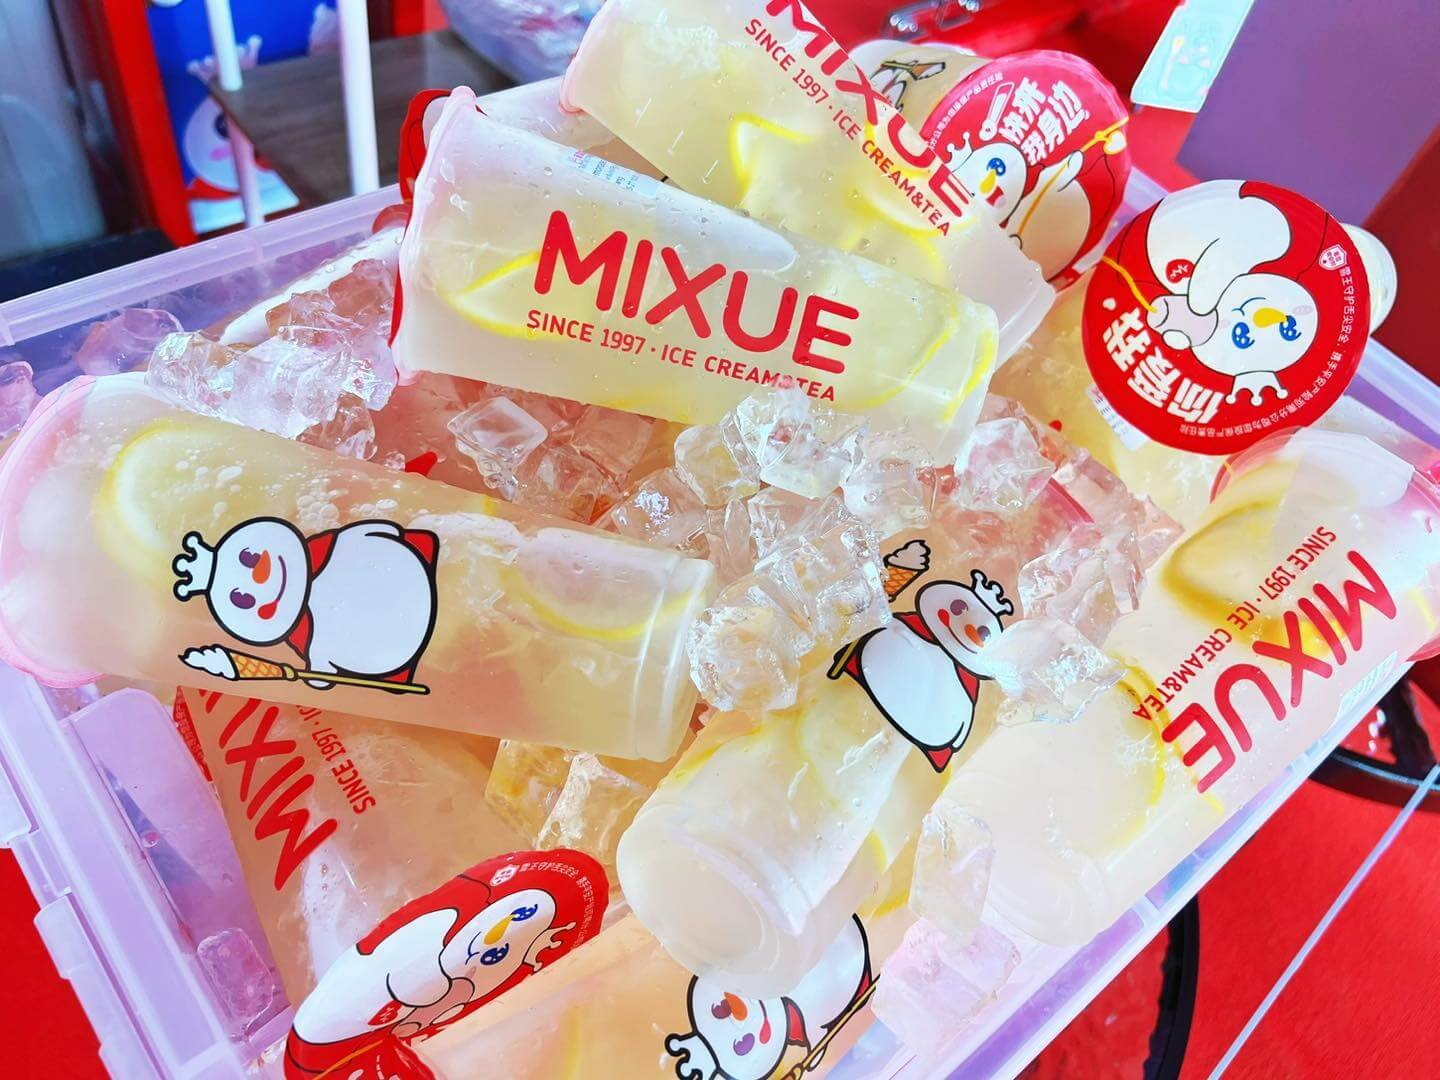 MIXUE ไอศกรีม-ชานมไข่มุก เจ้าดังแดนมังกร บุกตลาดไทย ชู ราคามิตรภาพ 